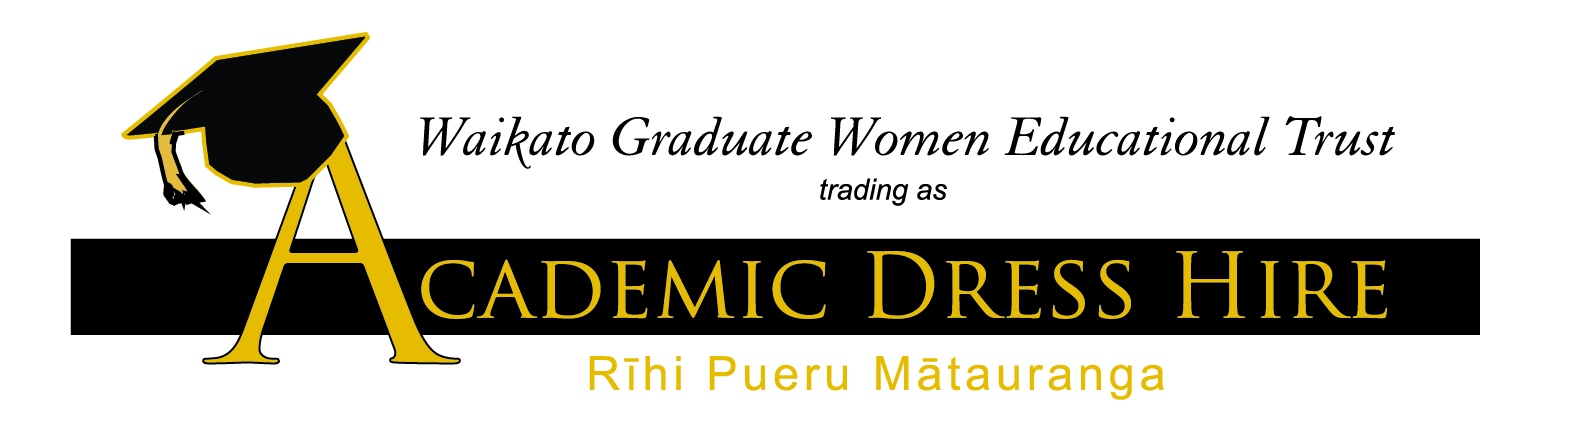 academic dress hire logo-01